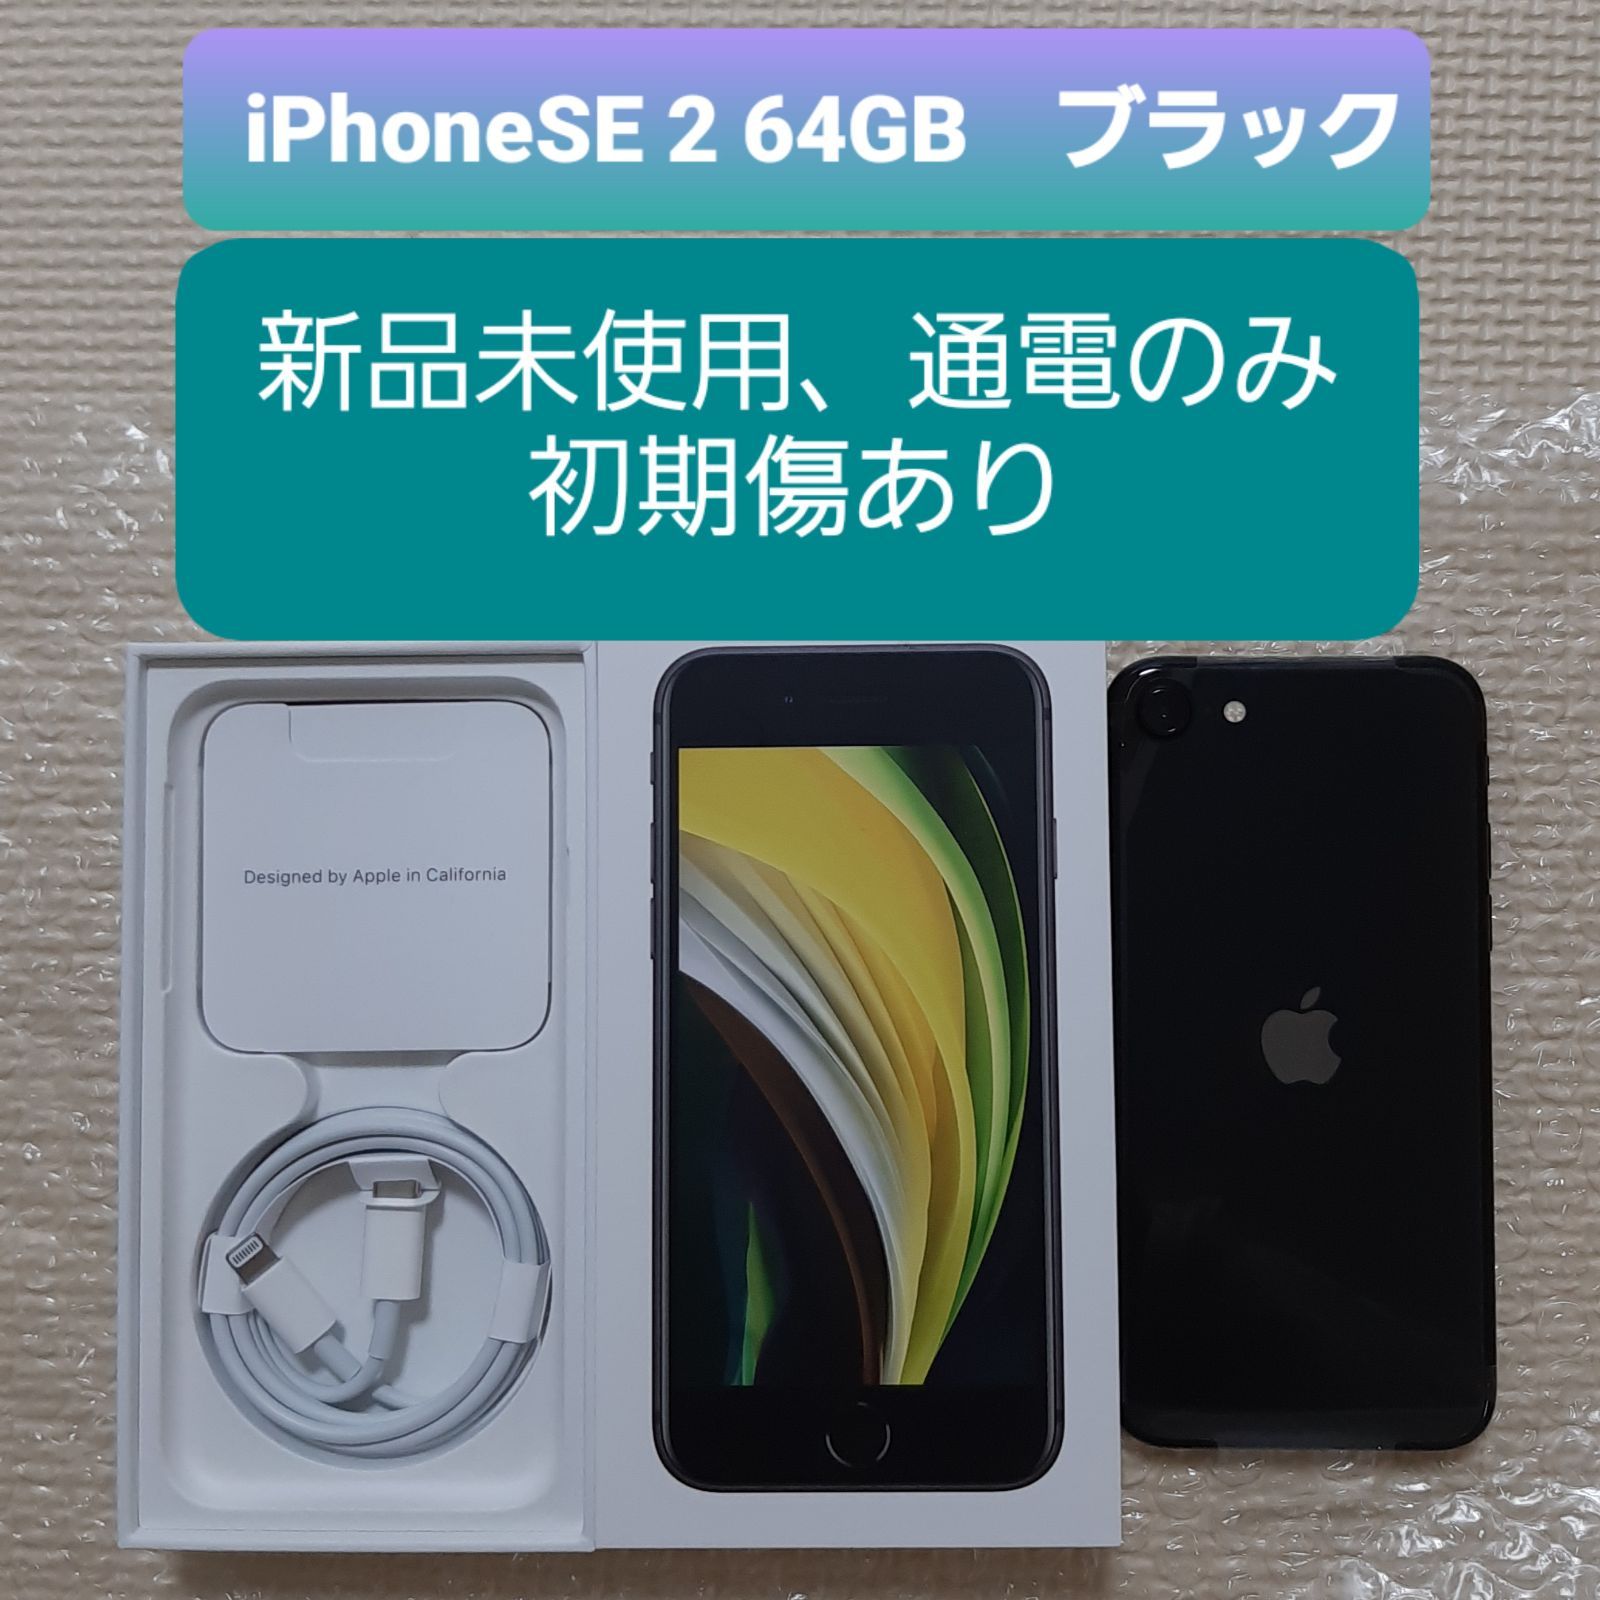 iPhone SE 第2世代 (SE2) ブラック 64GB SIMフリー - メルカリ